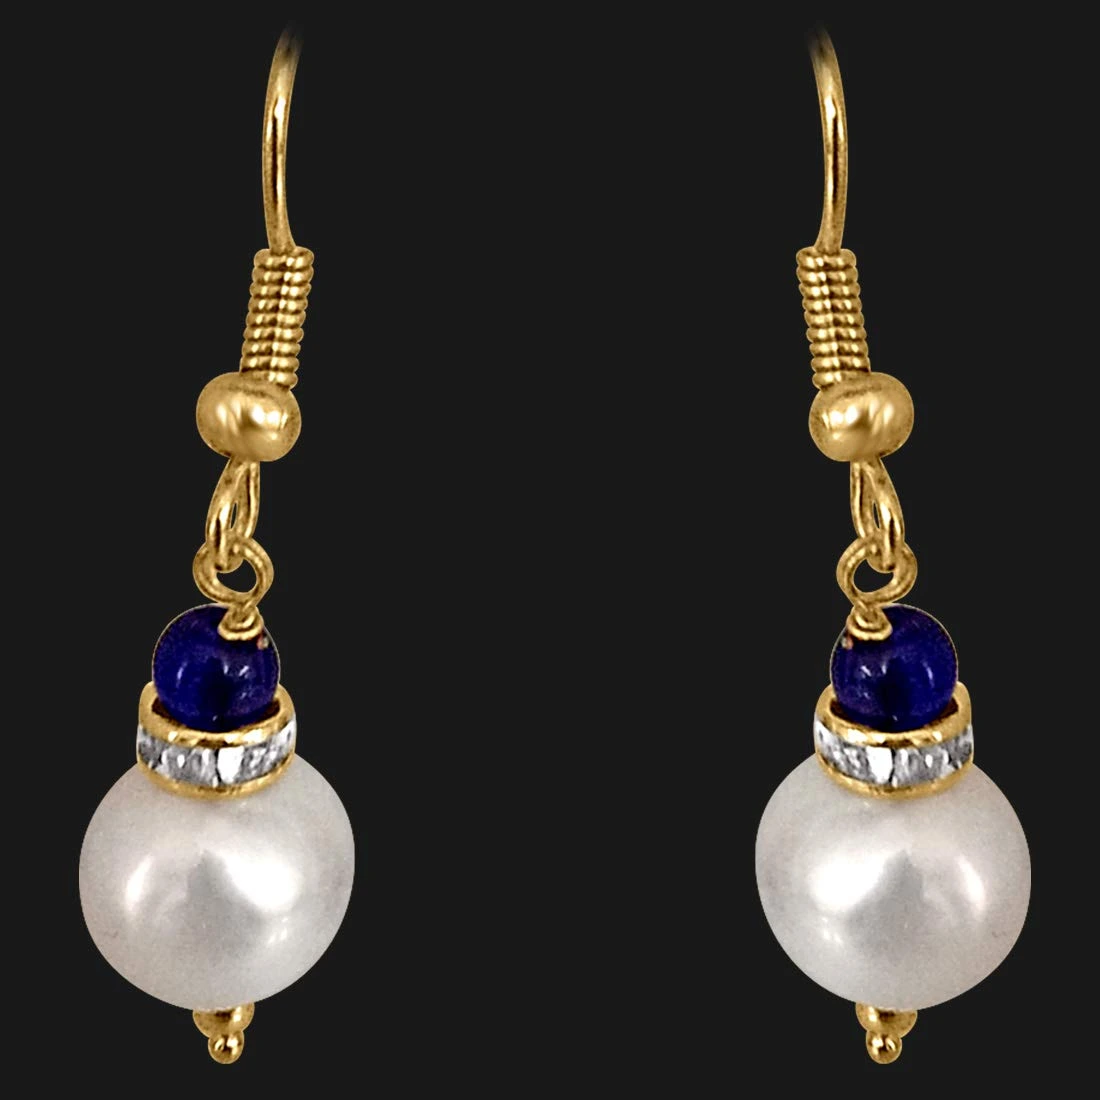 Real Big Pearl & Blue Stone Earrings (SE213)